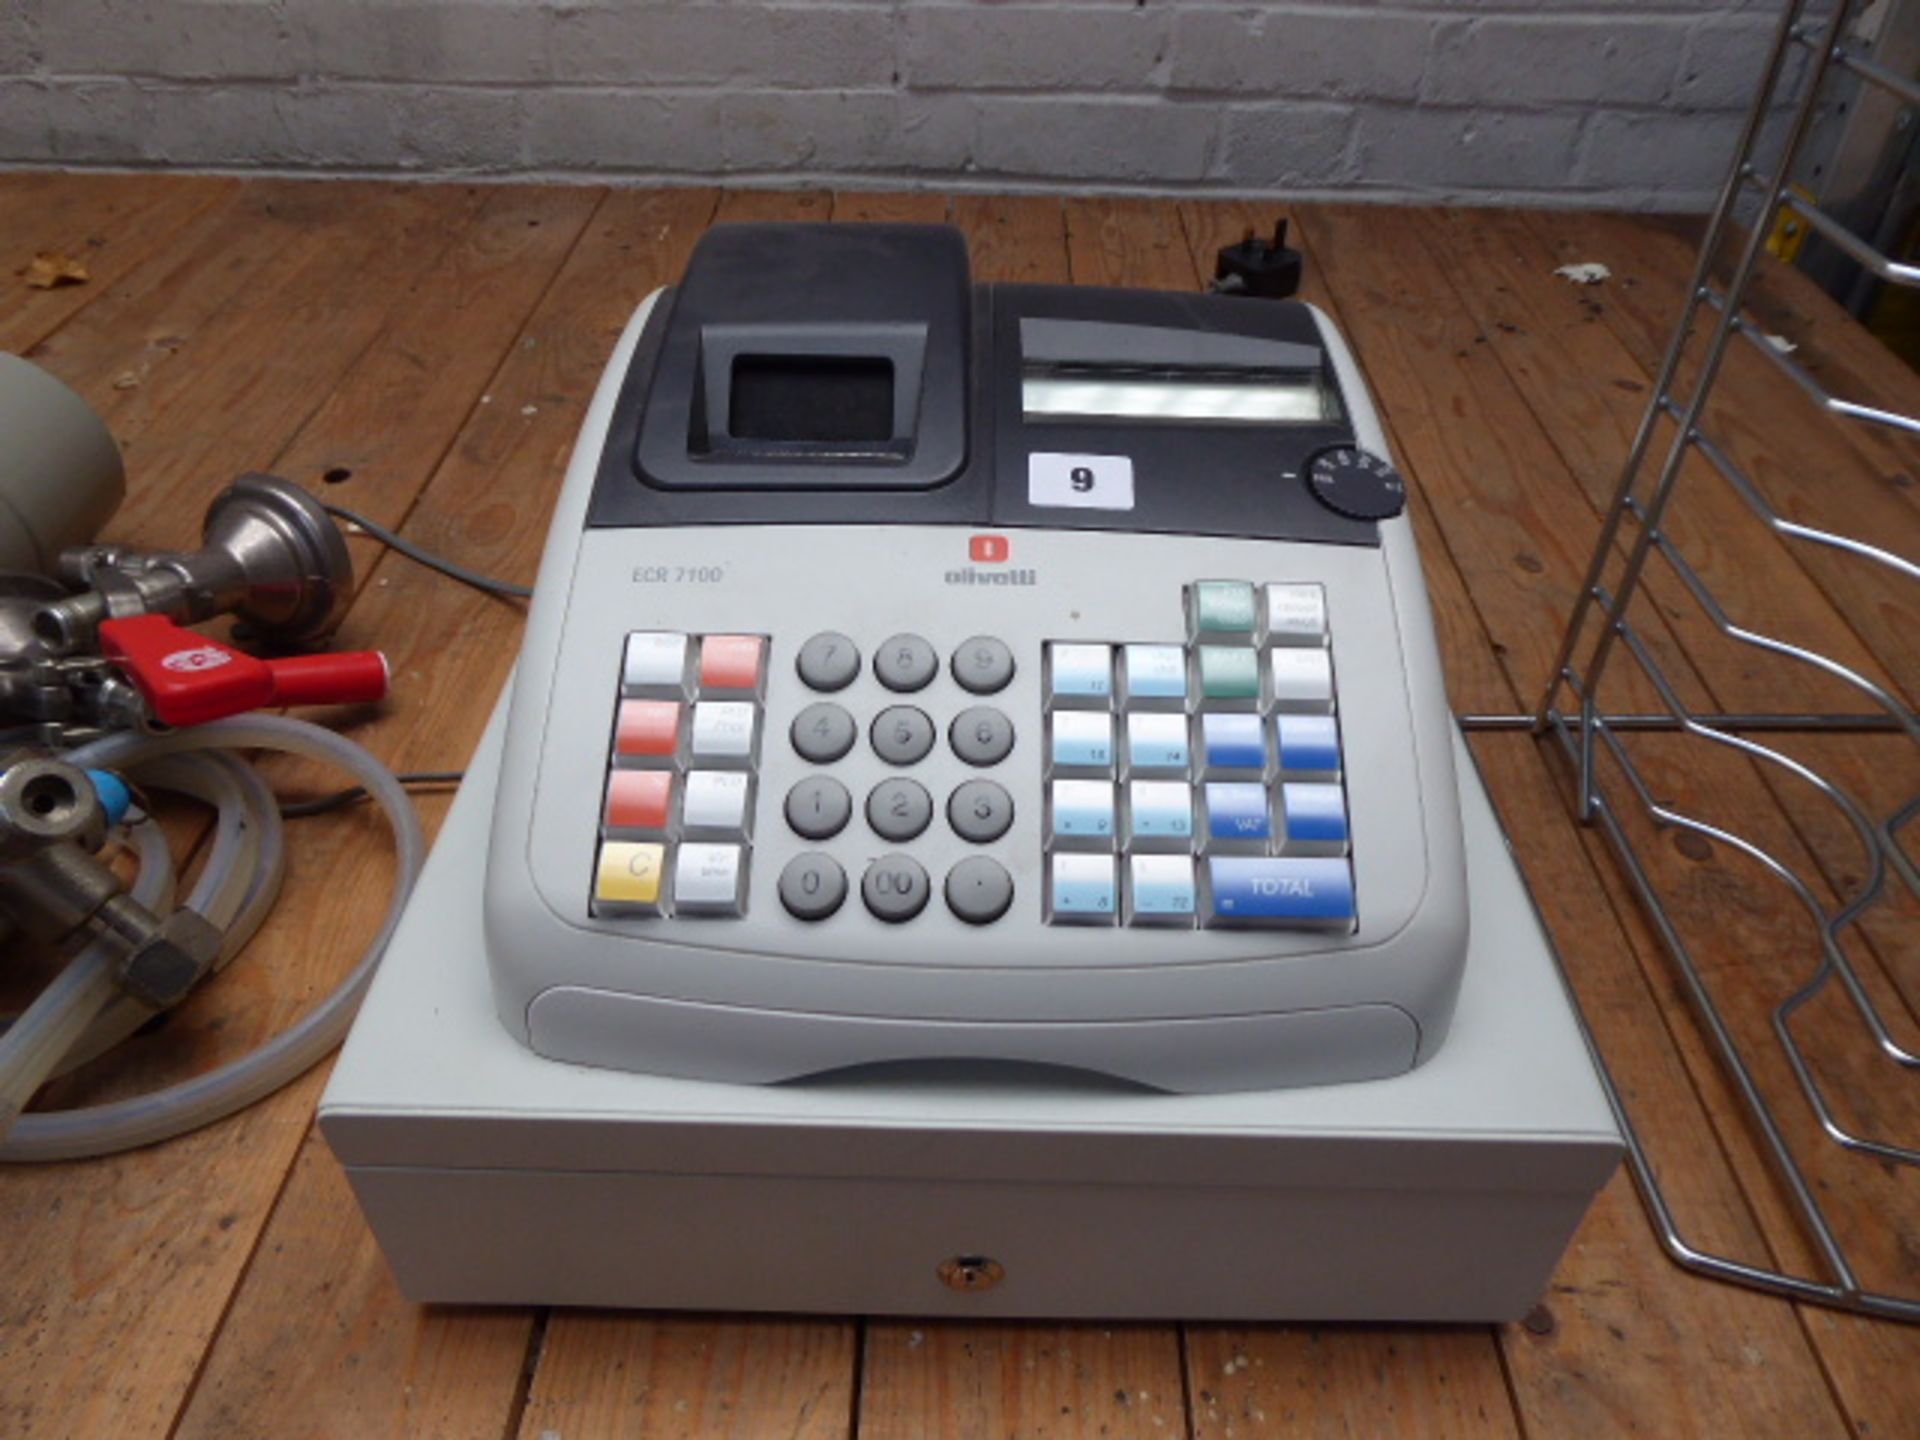 (40) Olivetti ECR7100 electronic cash register